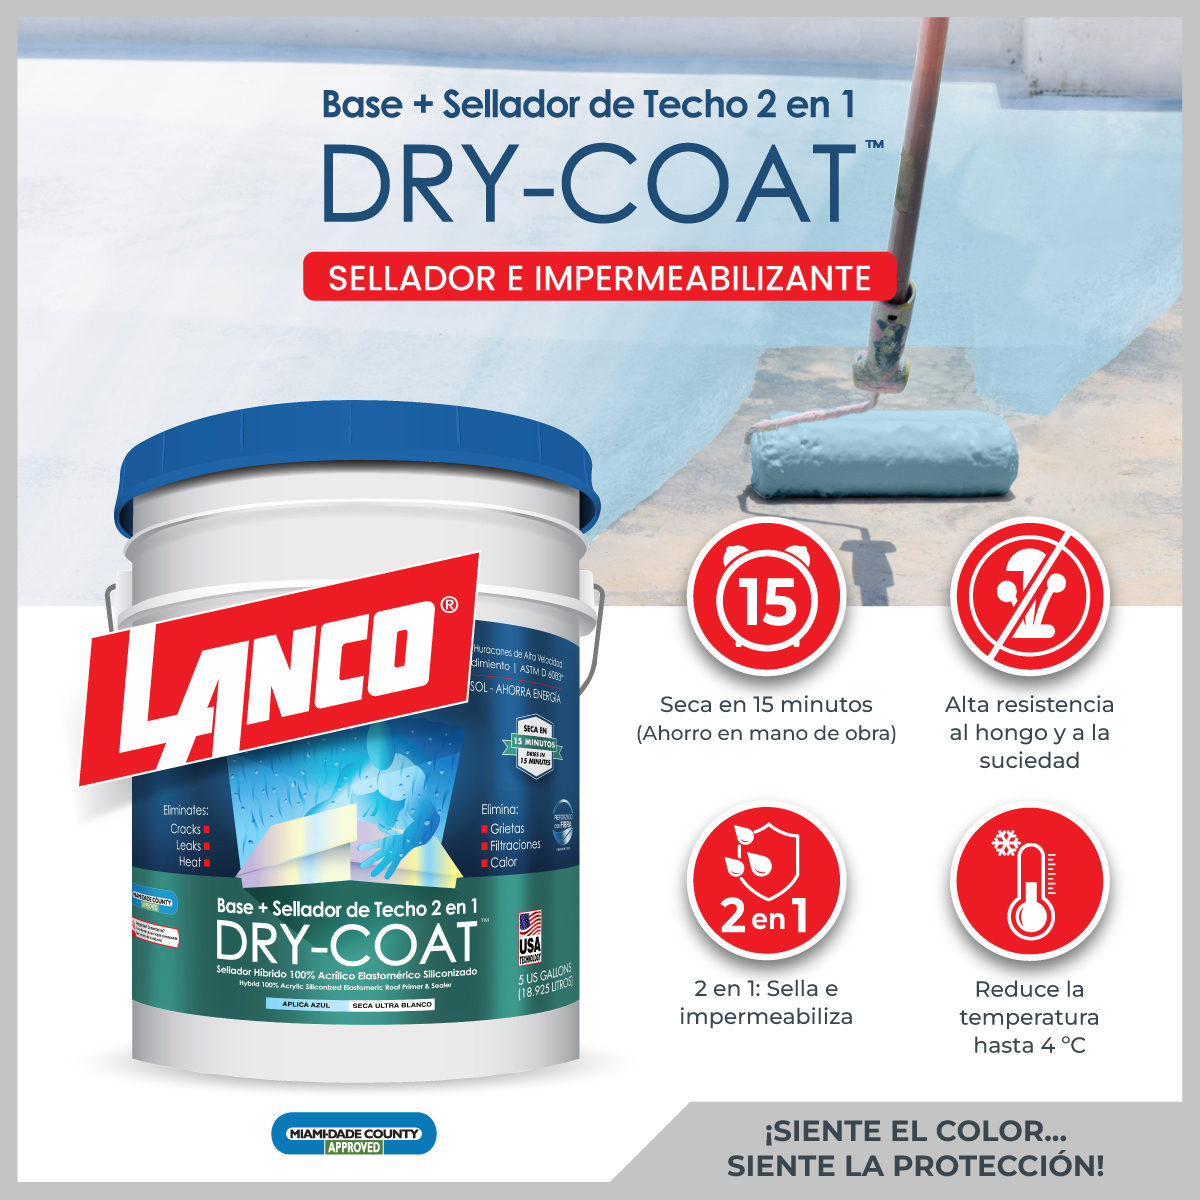 Lanco Dry-Coat Smooth Flat Interior/Exterior (Pintura Impermeabilizant –  Lanco Puerto Rico